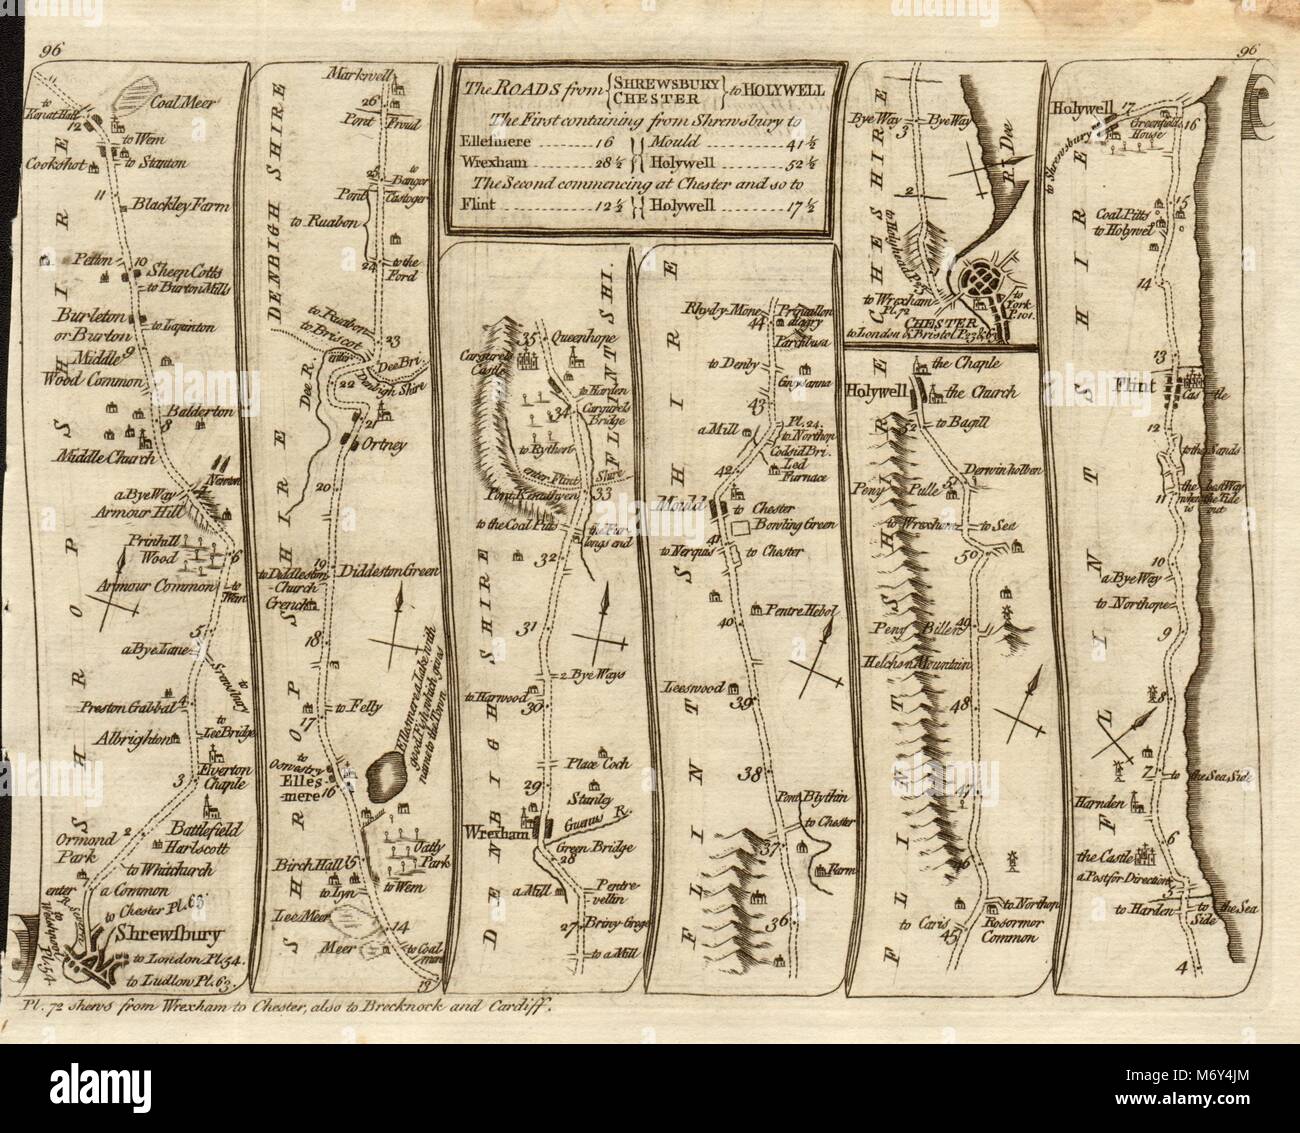 Shrewsbury Ellesmere Wrexham Mold Holywell Chester Flint. KITCHIN road map 1767 Stock Photo